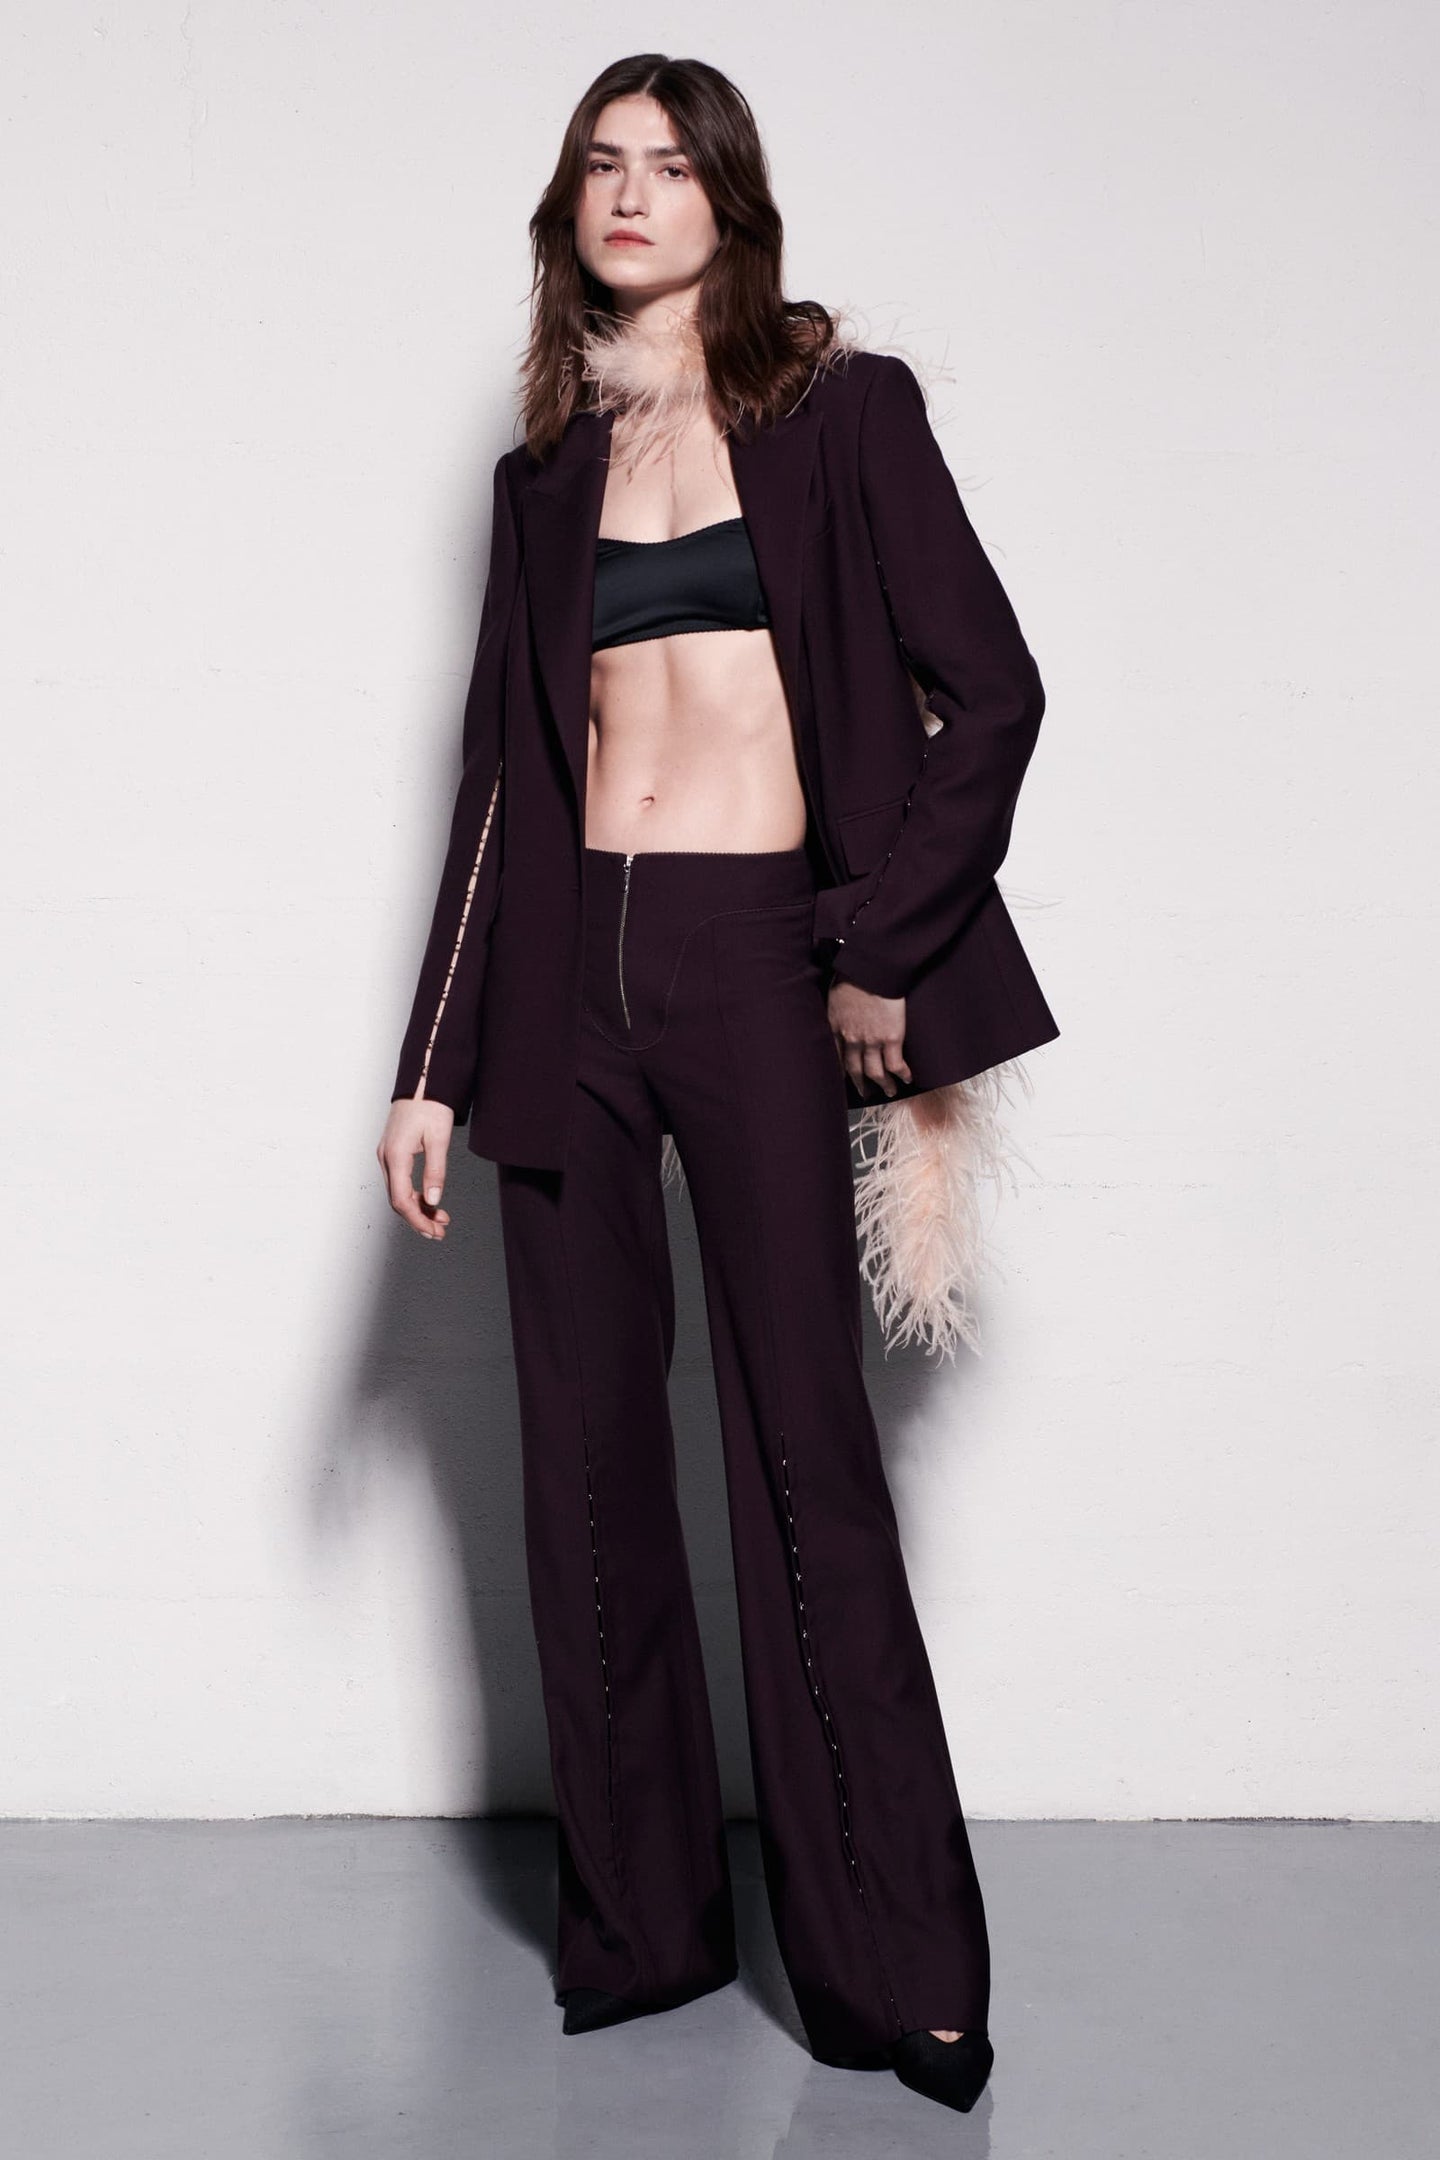 Model in burgundy Valentina jacket